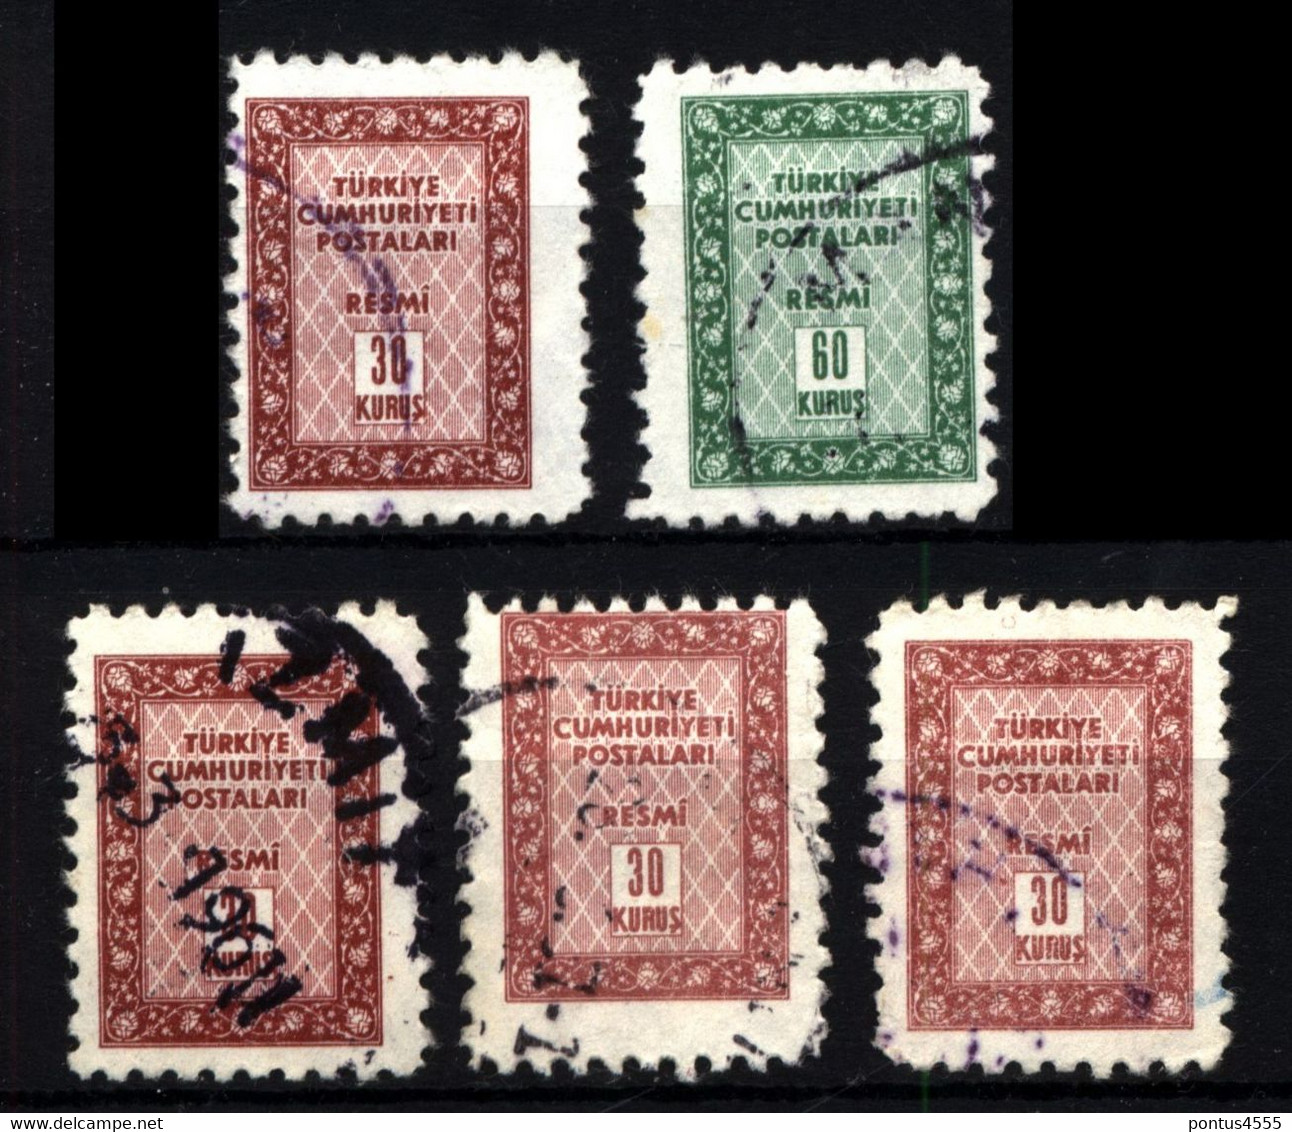 Turkey 1960 Mi D72-D73 Official Stamps - Postage Due